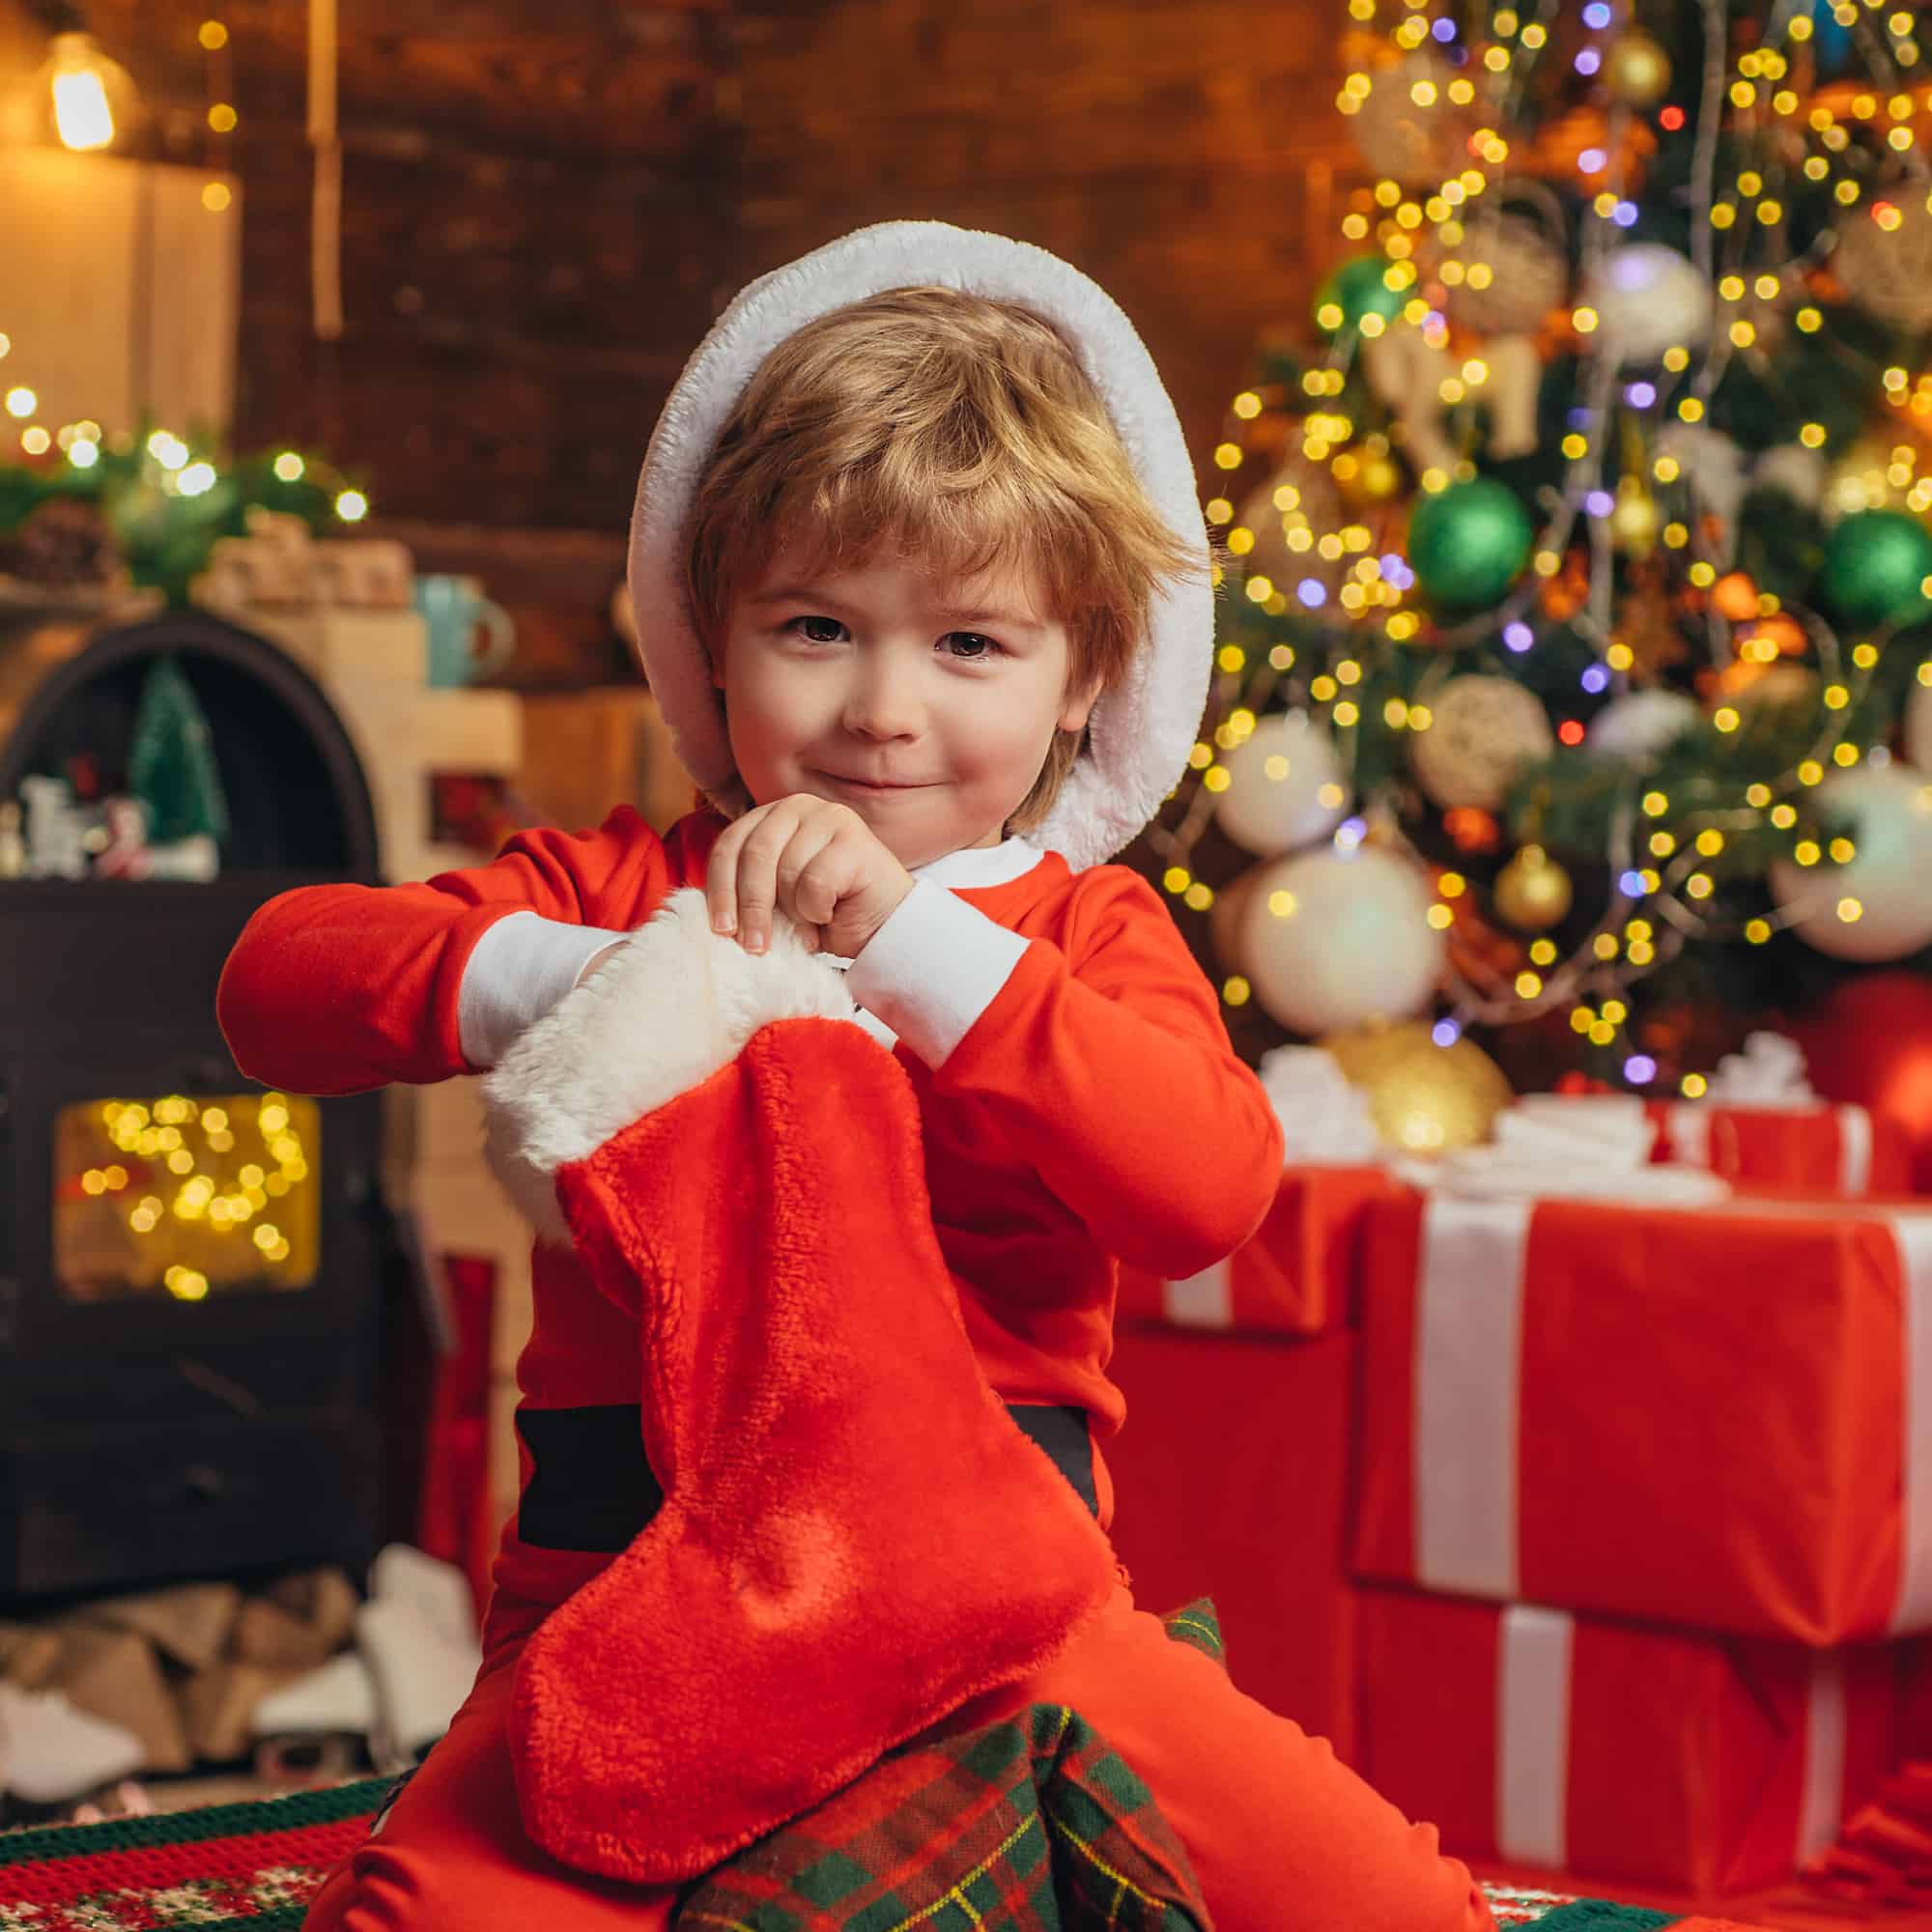 Smiling blond boy in Santa hat reaching into Christmas stocking